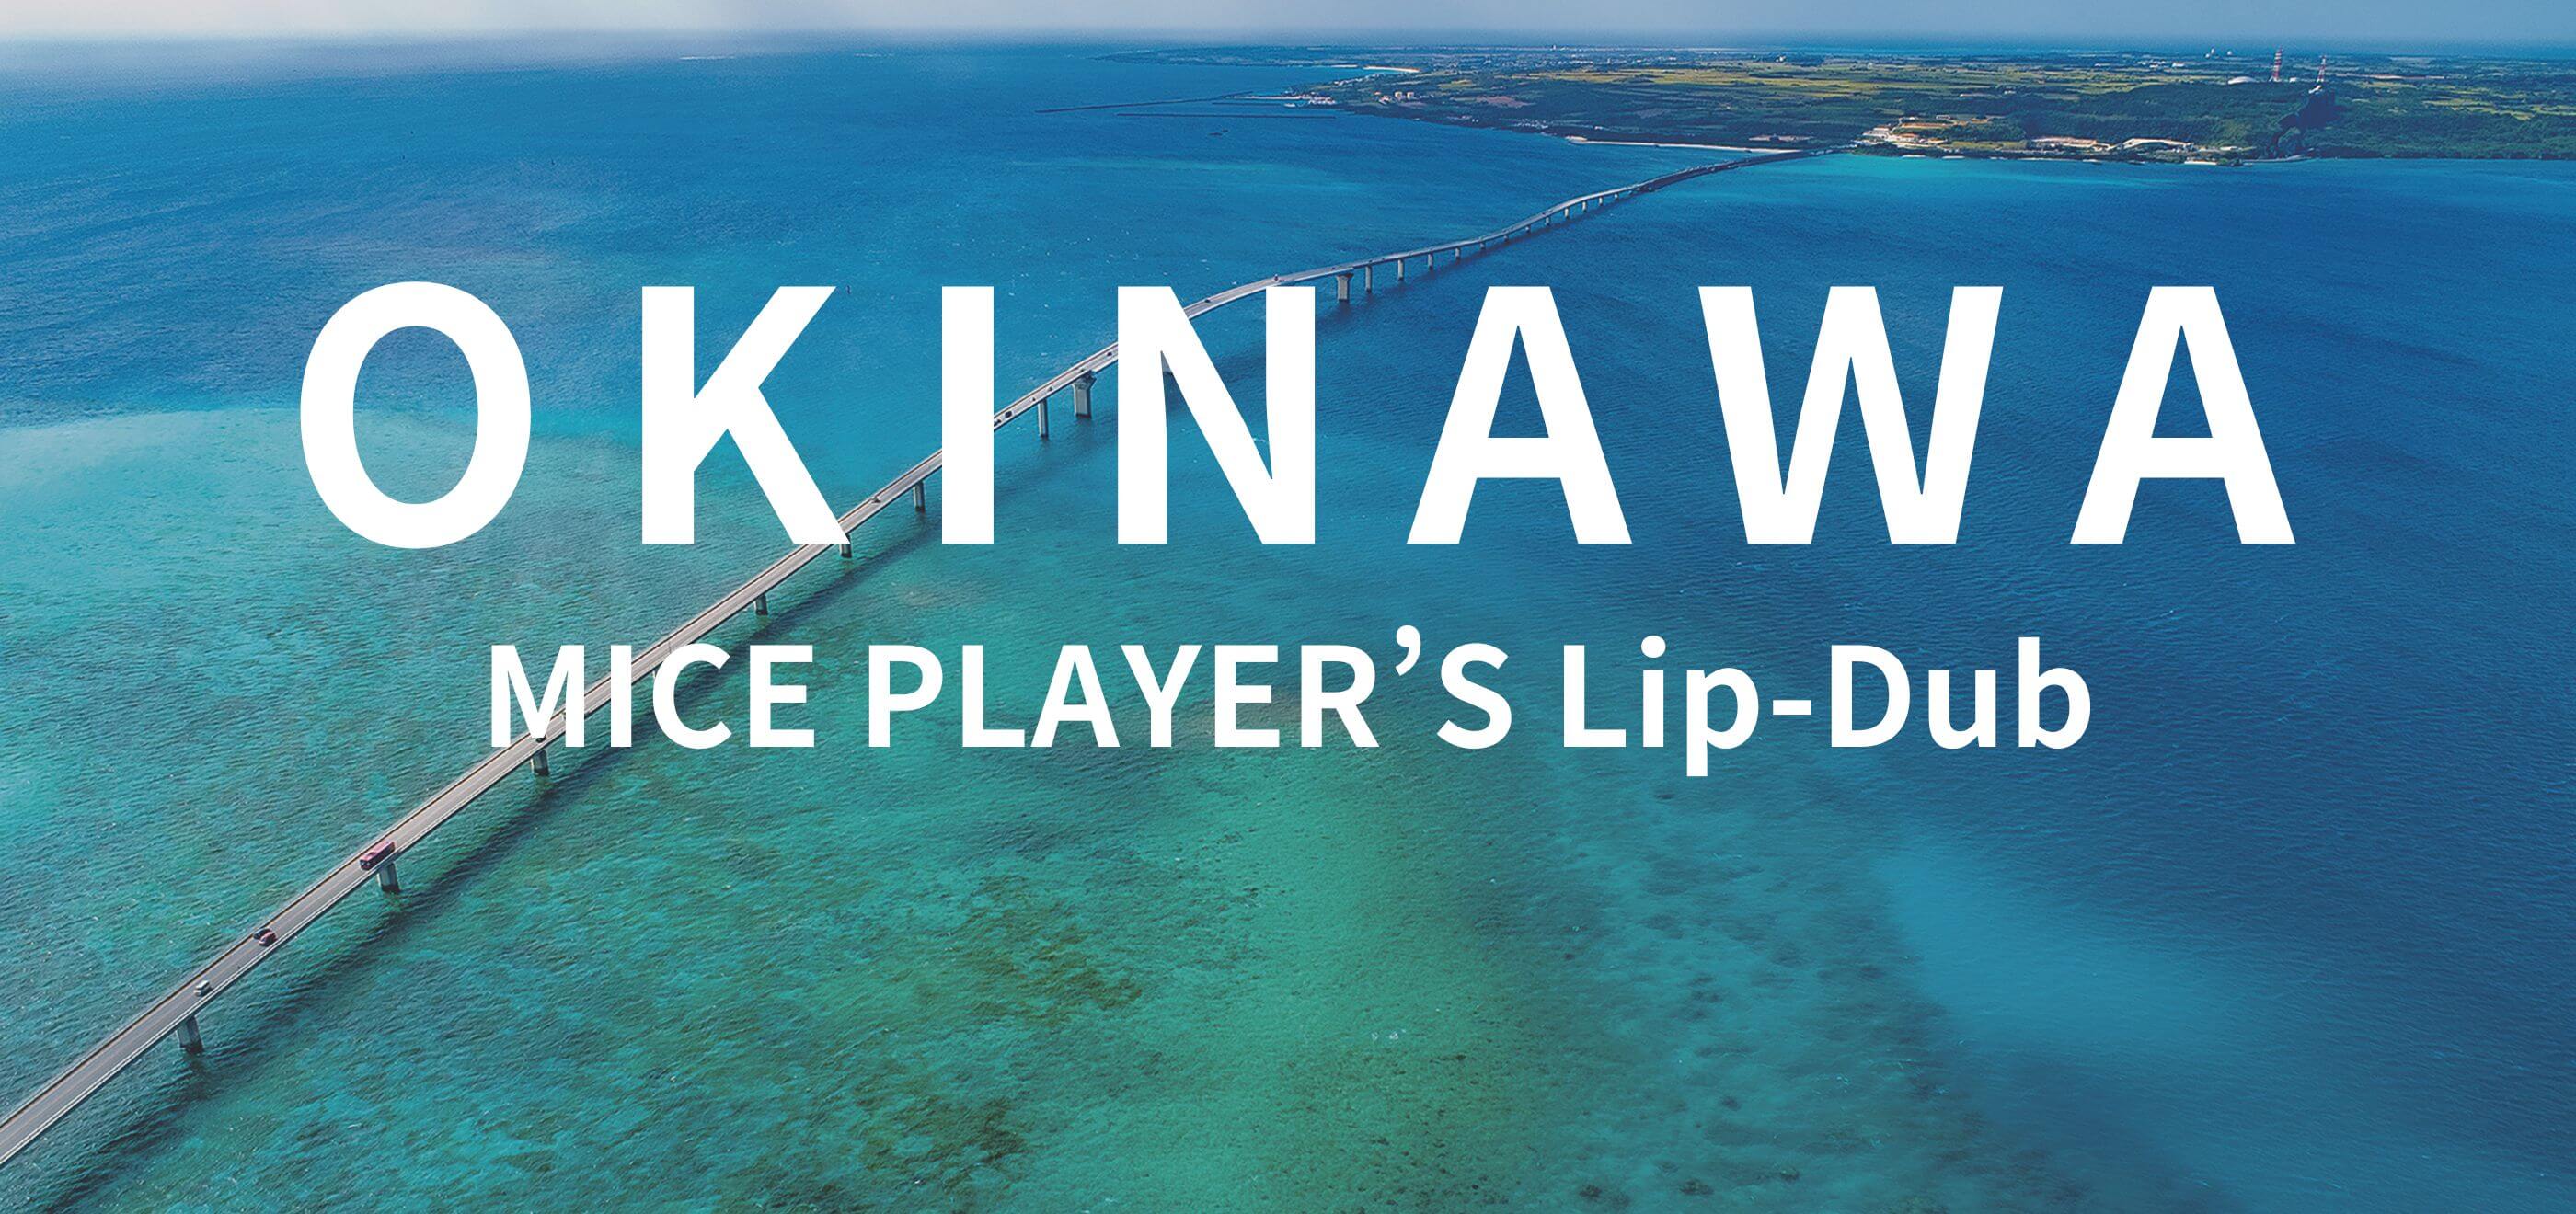 OKINAWA MICE PLAYER'S Lip-Dub